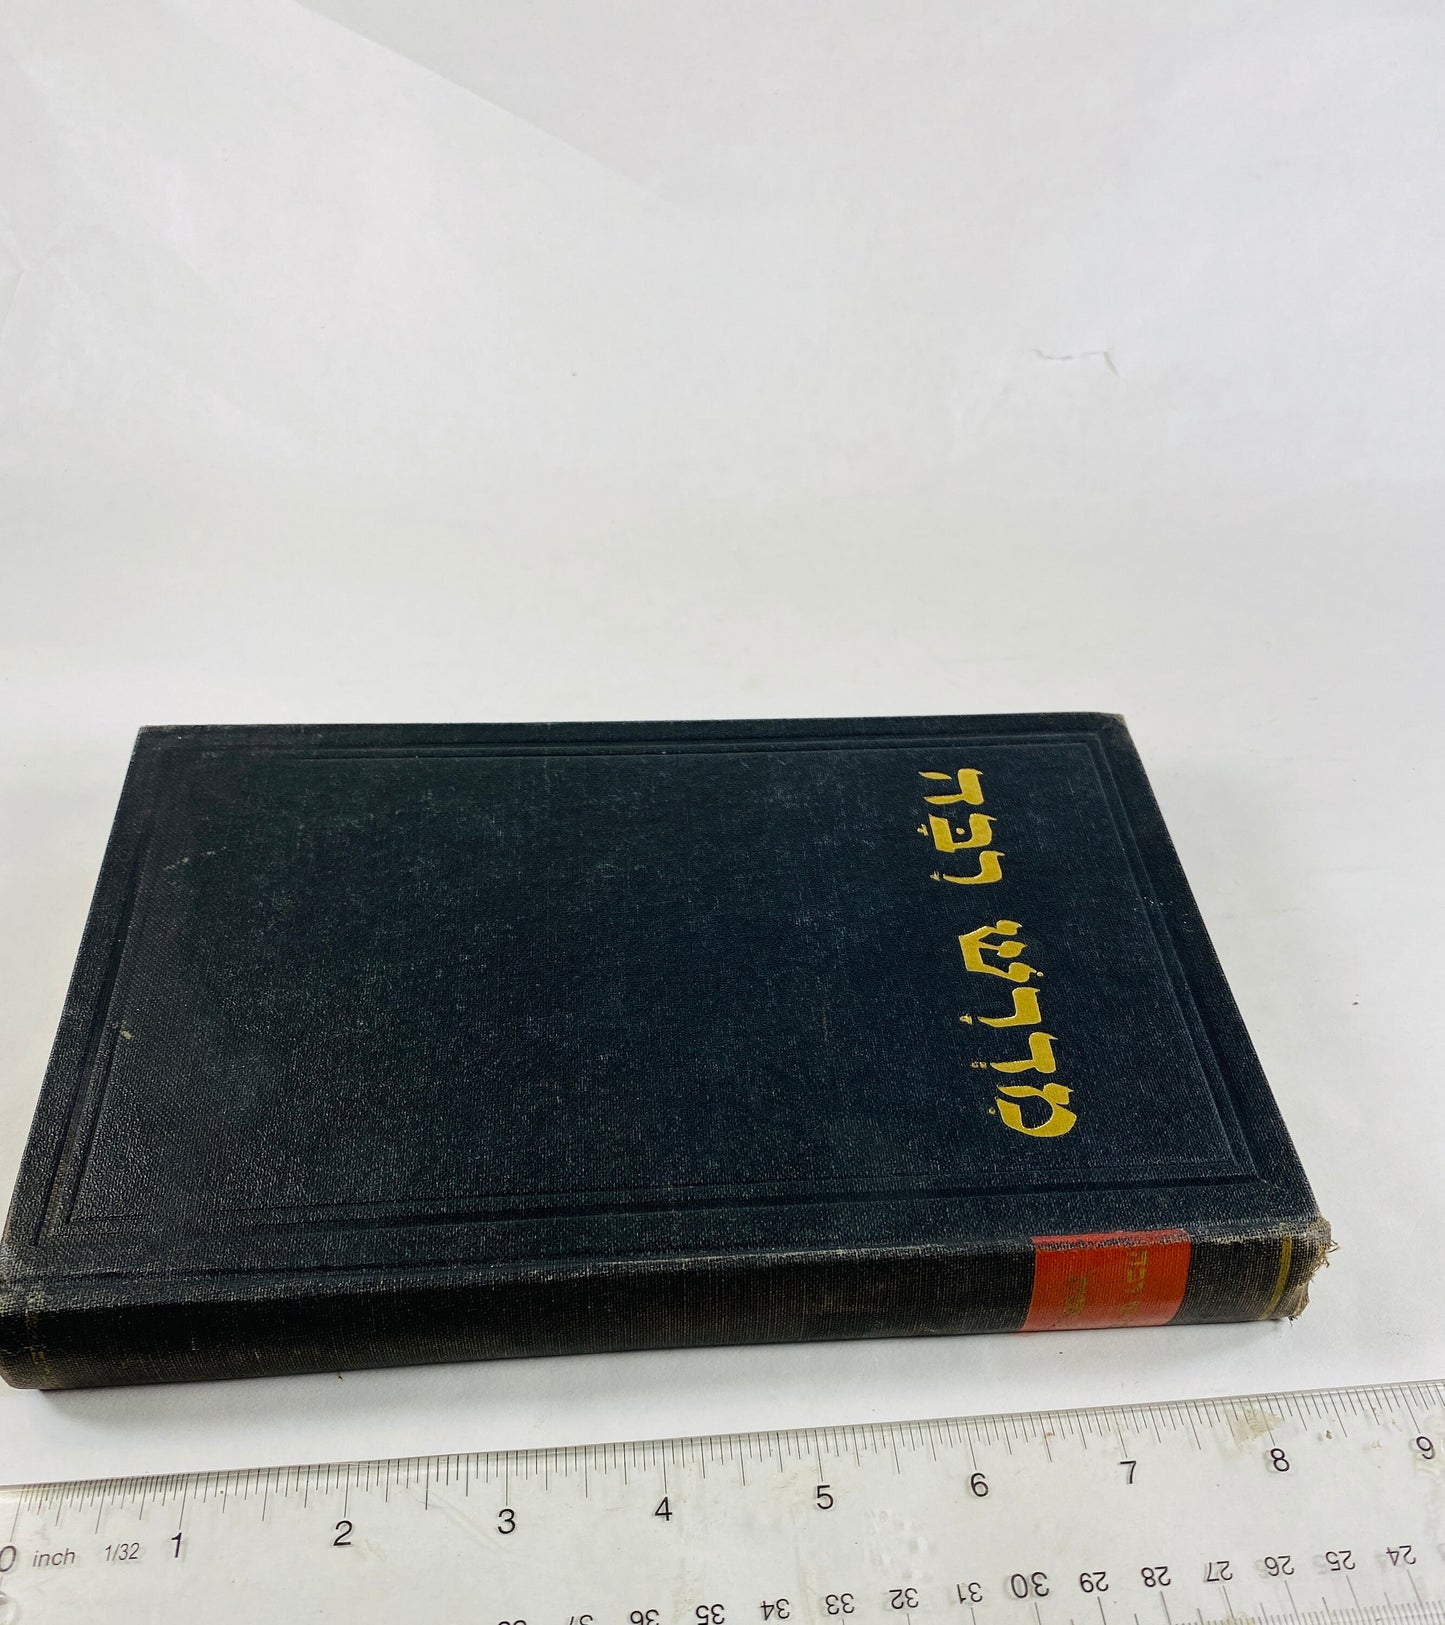 1960 vintage Mishnah Judaica Hebraica Jewish Ketuvim. Targum Tehillim in Hebrew. Vintage black book binding